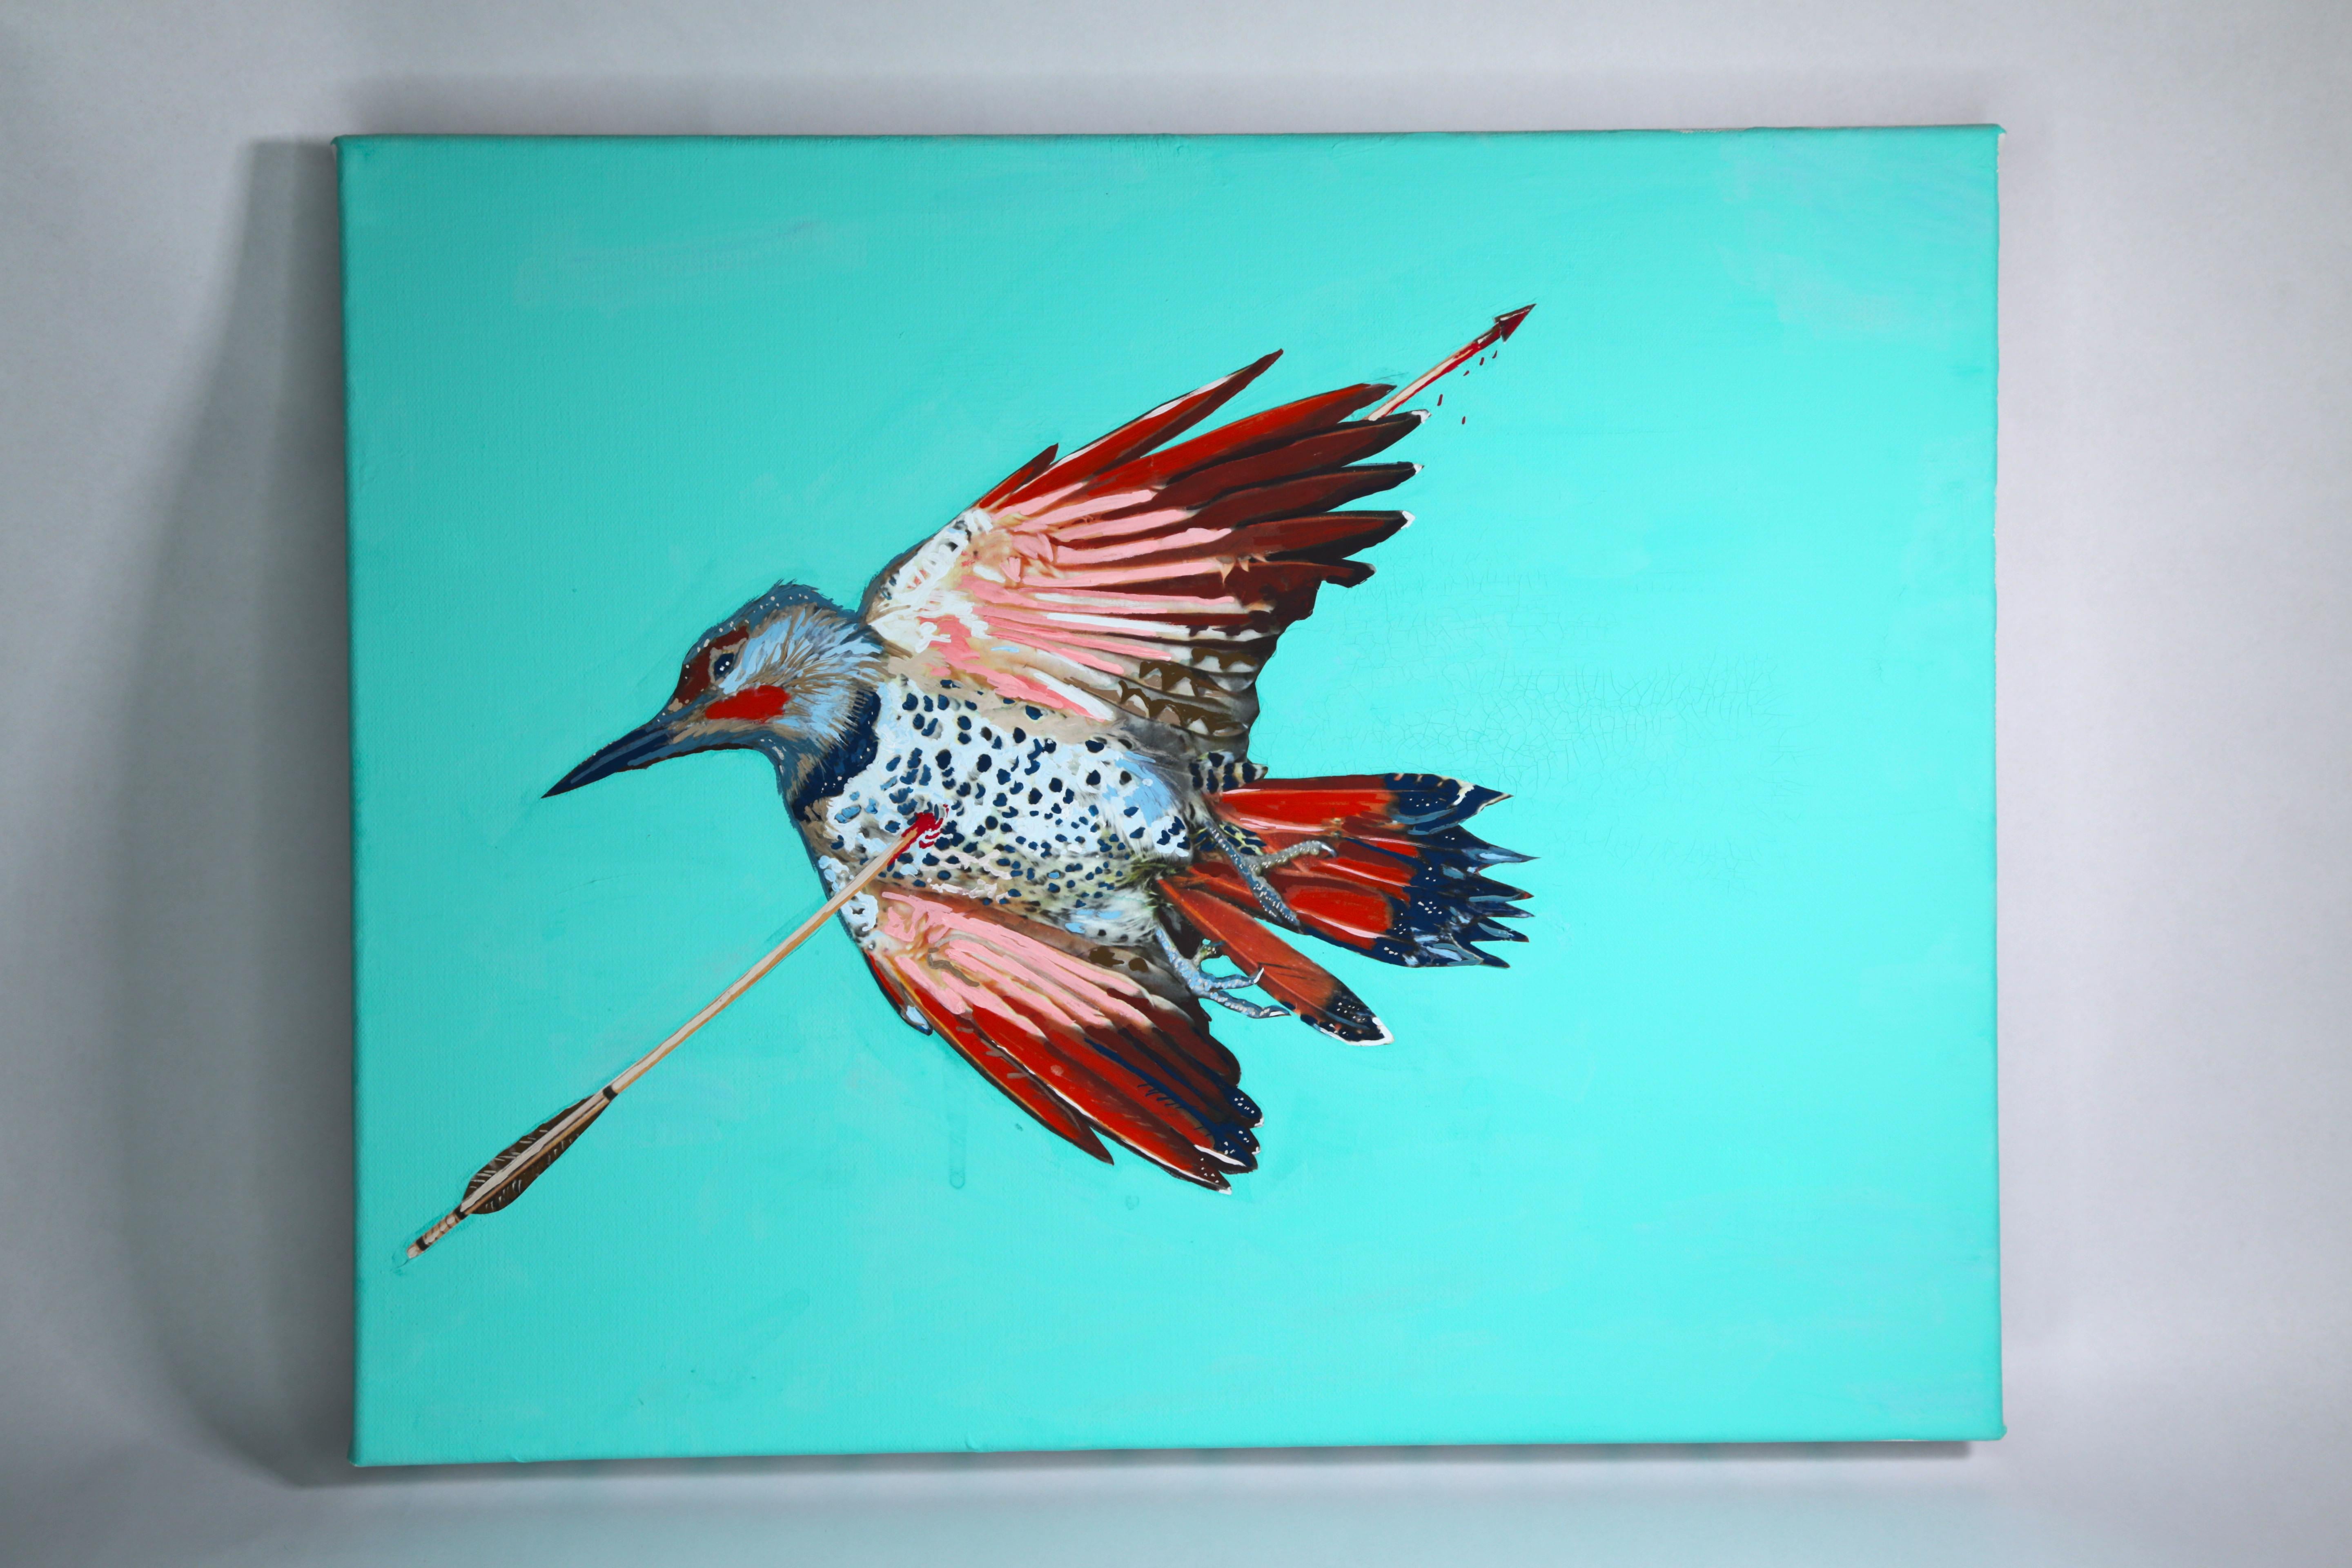 Peinture au collage sur toile : "Bird 5"